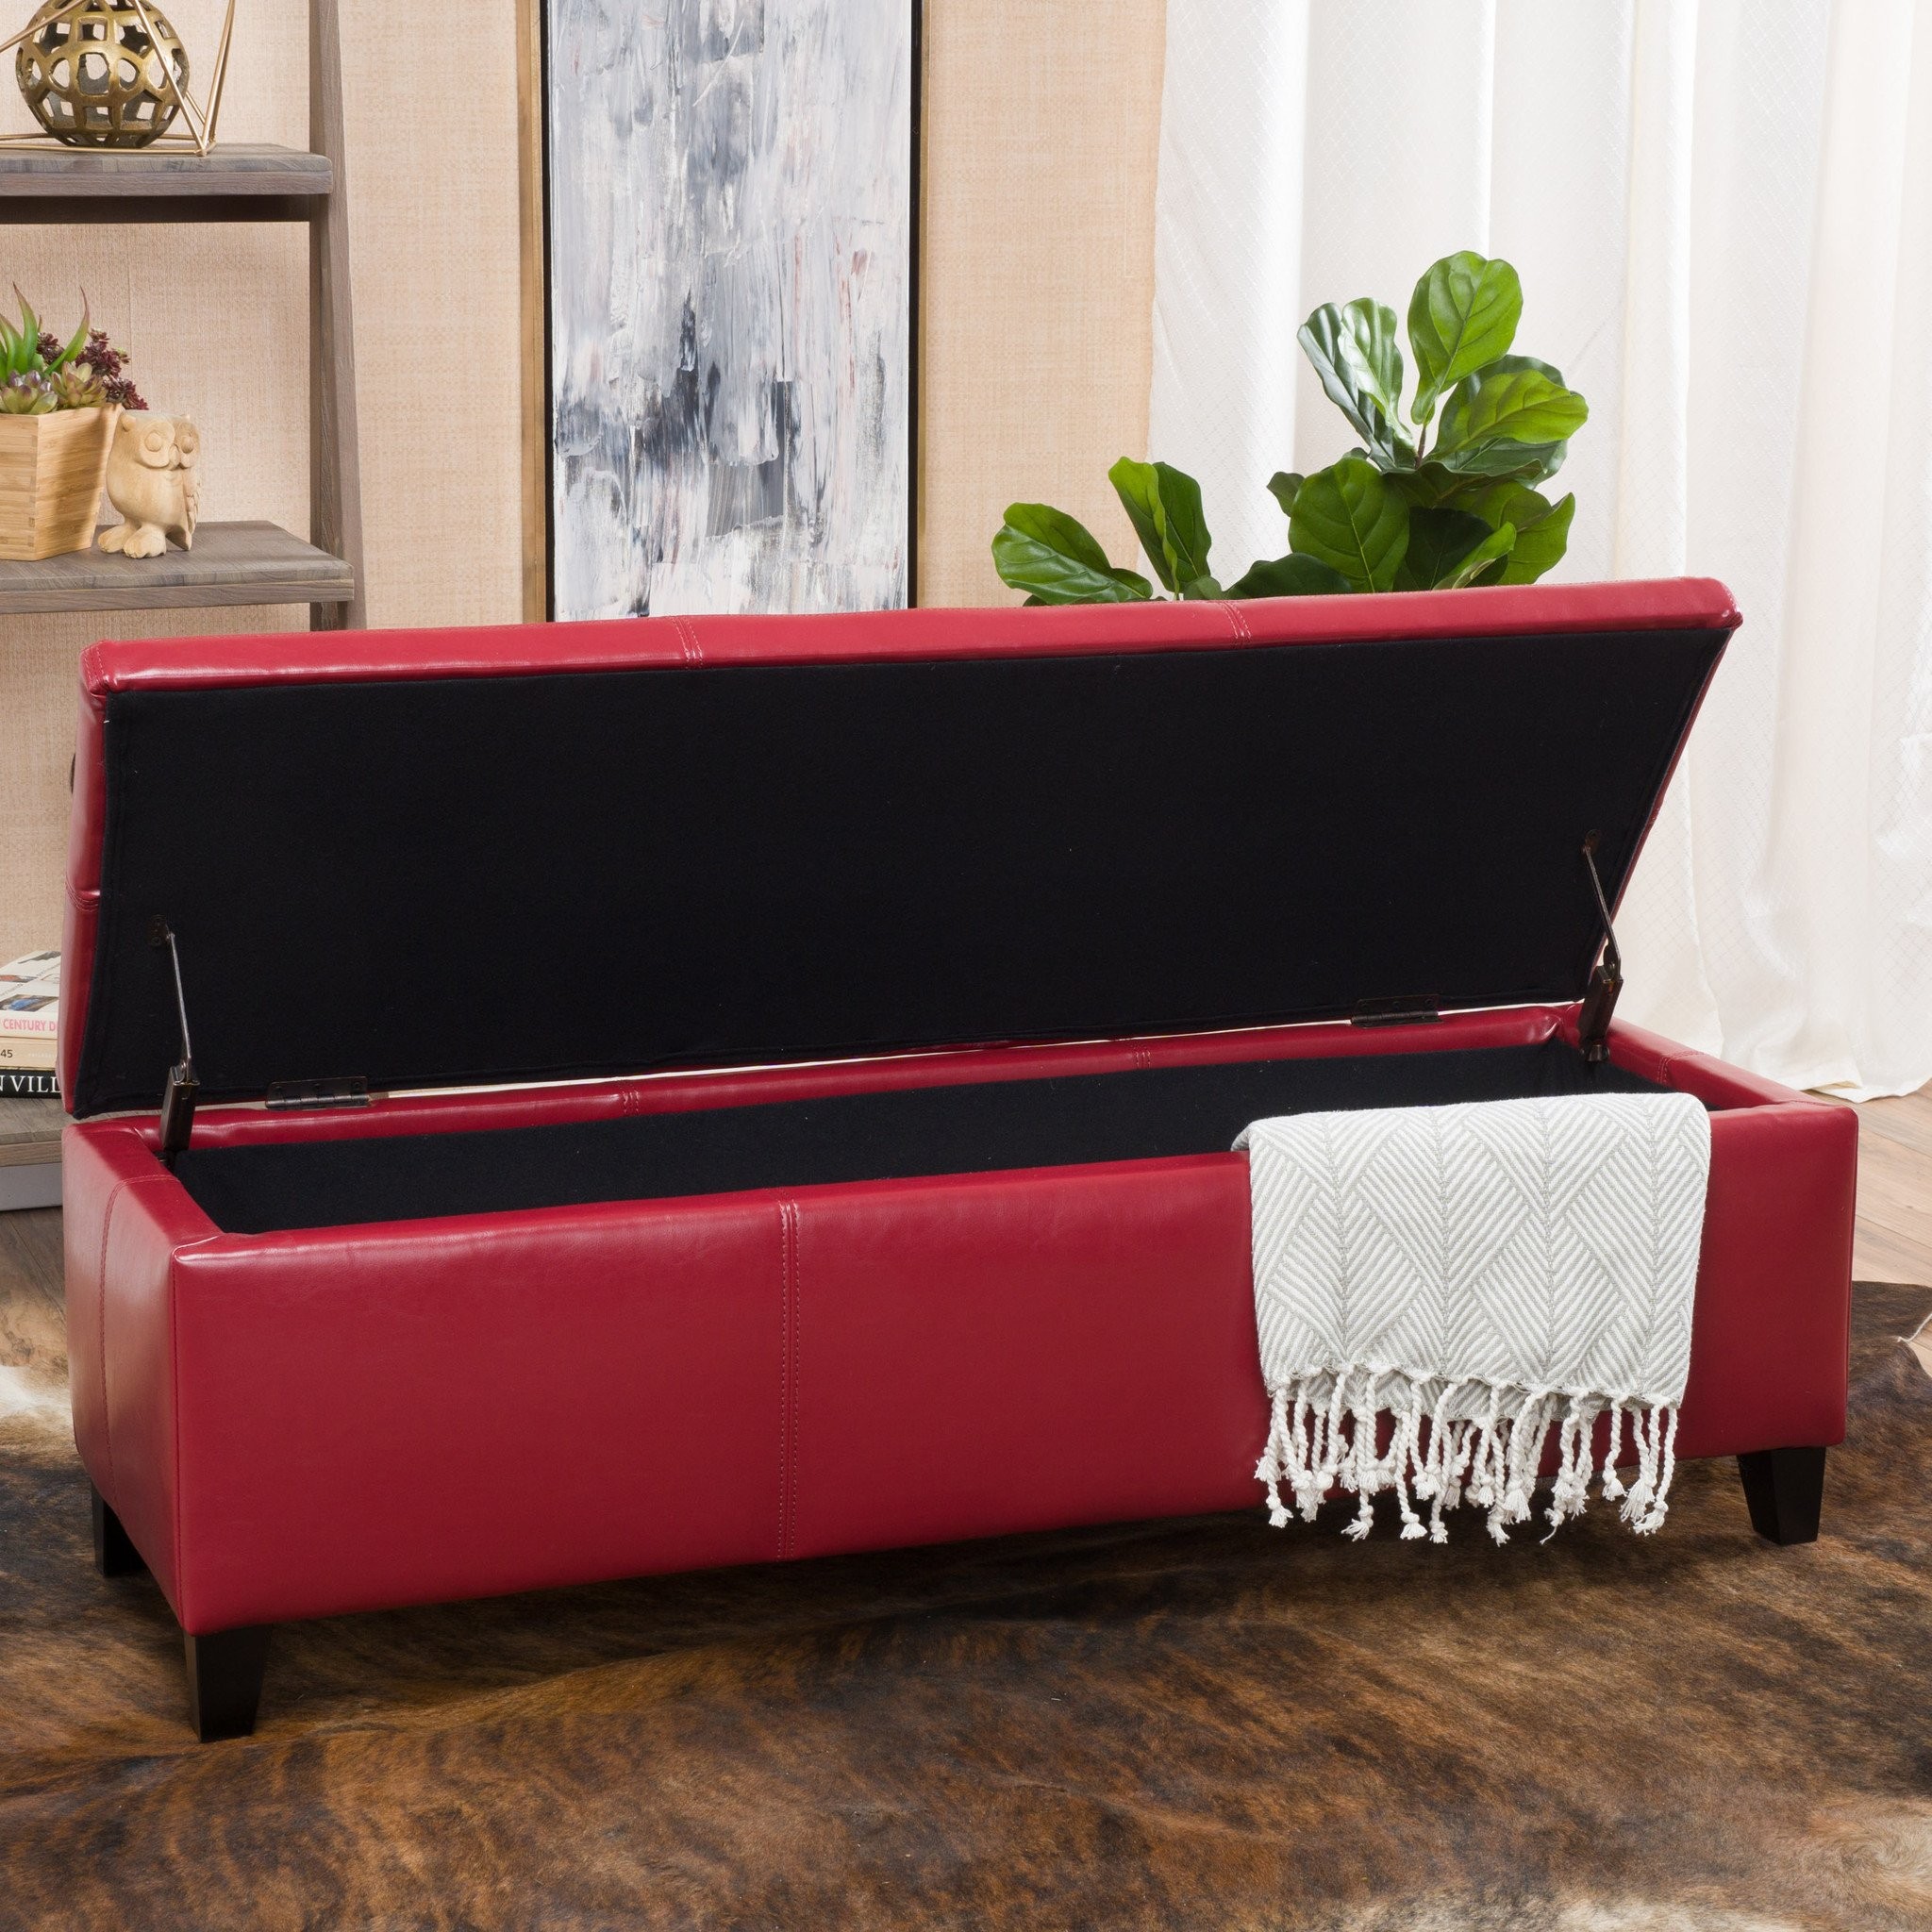 Skyler Red Leather Storage Ottoman Bench